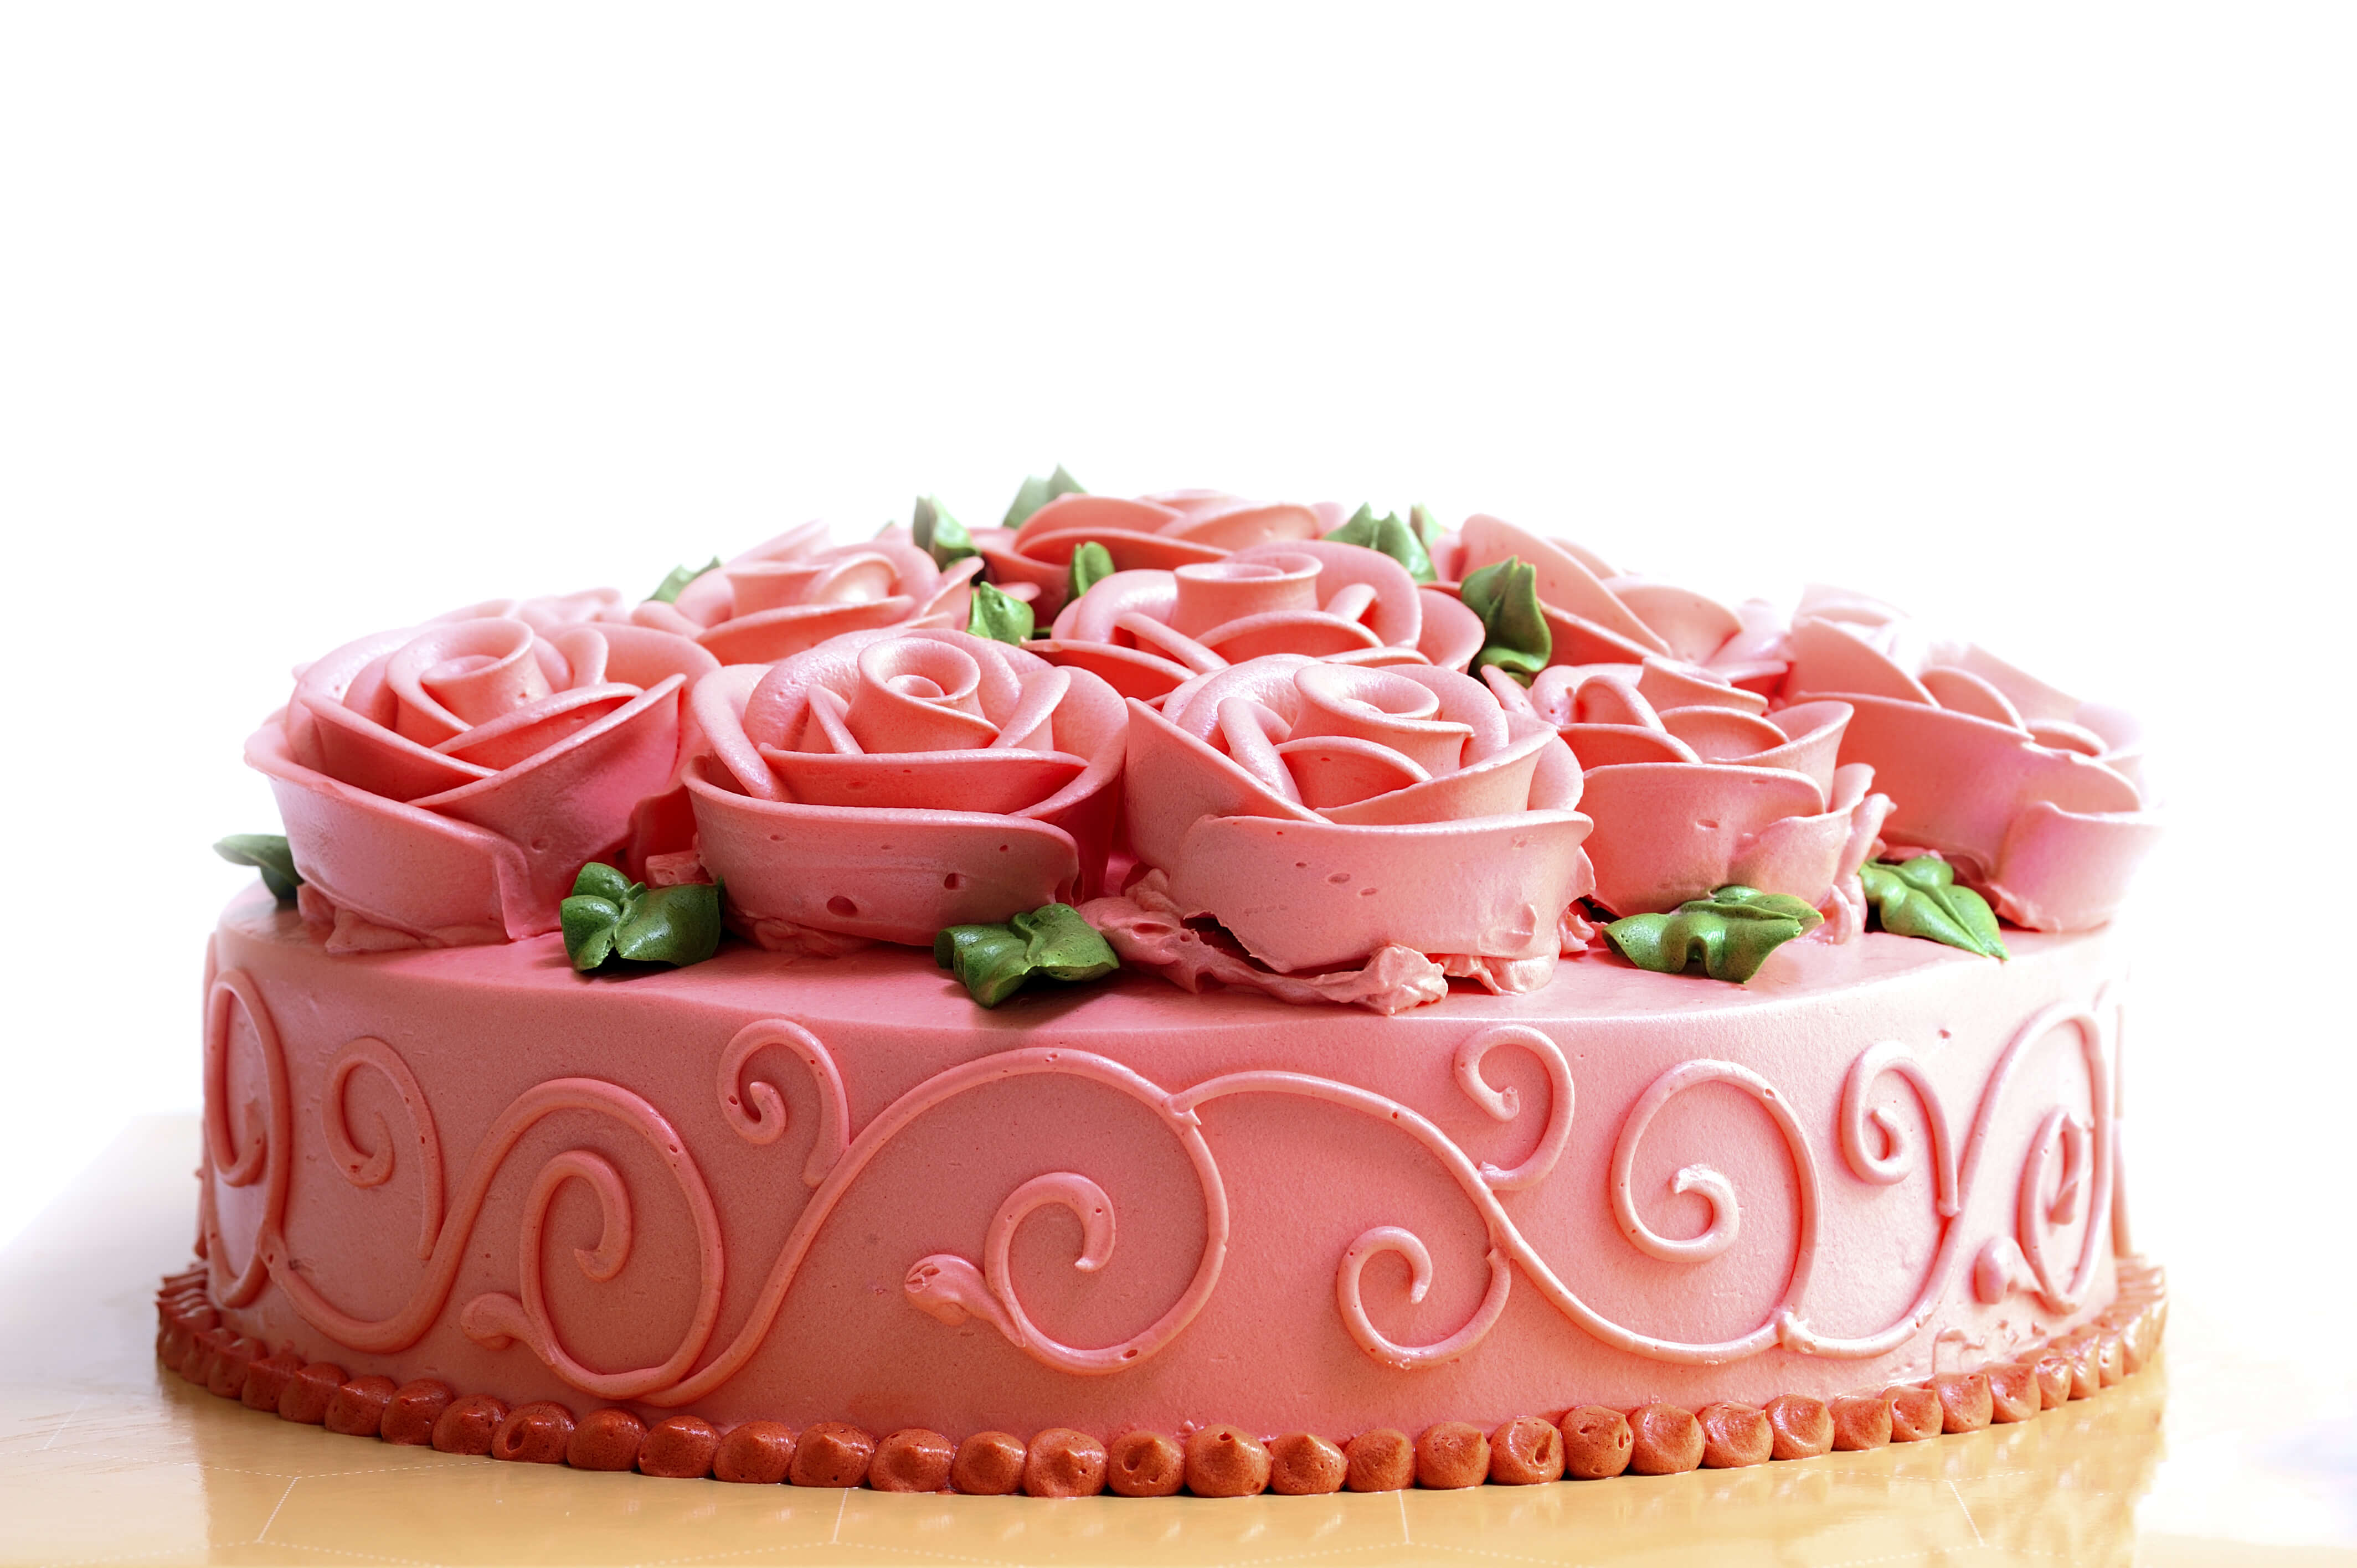 Beki Cook's Cake Blog: Ten Commandments of Cake Decorating